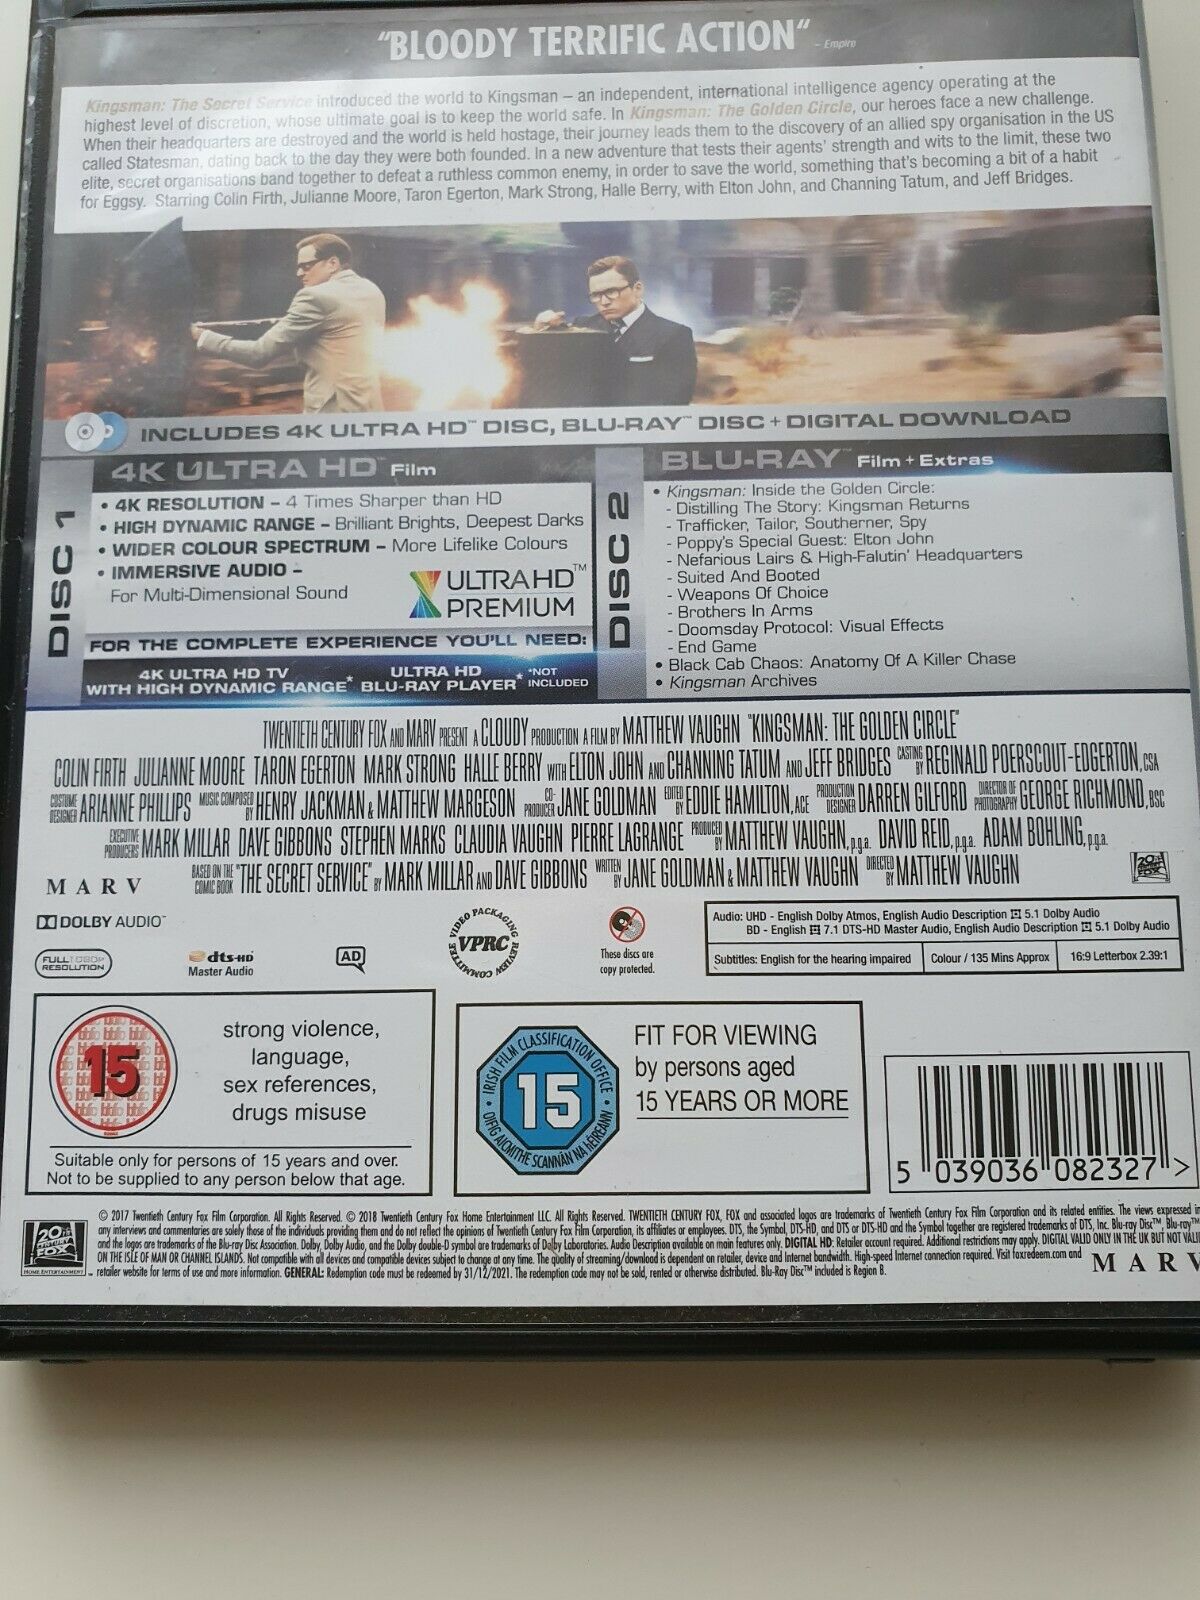 5039036082327 Kingsman Part 2 II The Golden Circle 4K UHD Ultra HD Blu-ray 2018